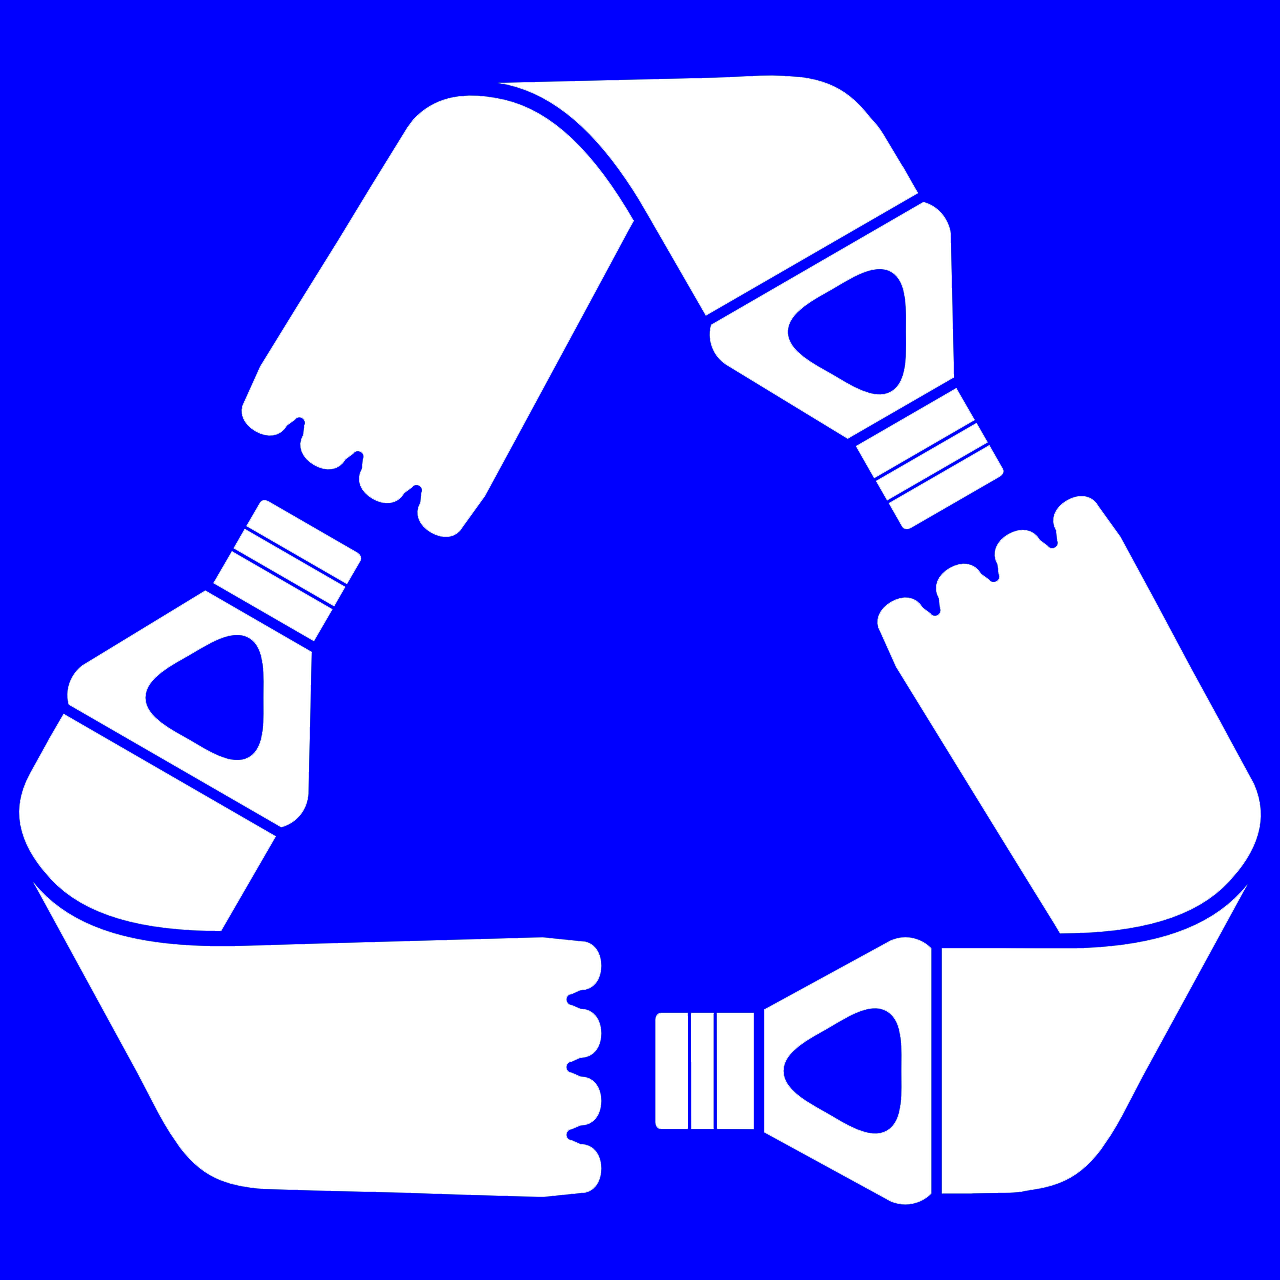 Hard plastic/metal/glass/food carton waste goes in blue bins.